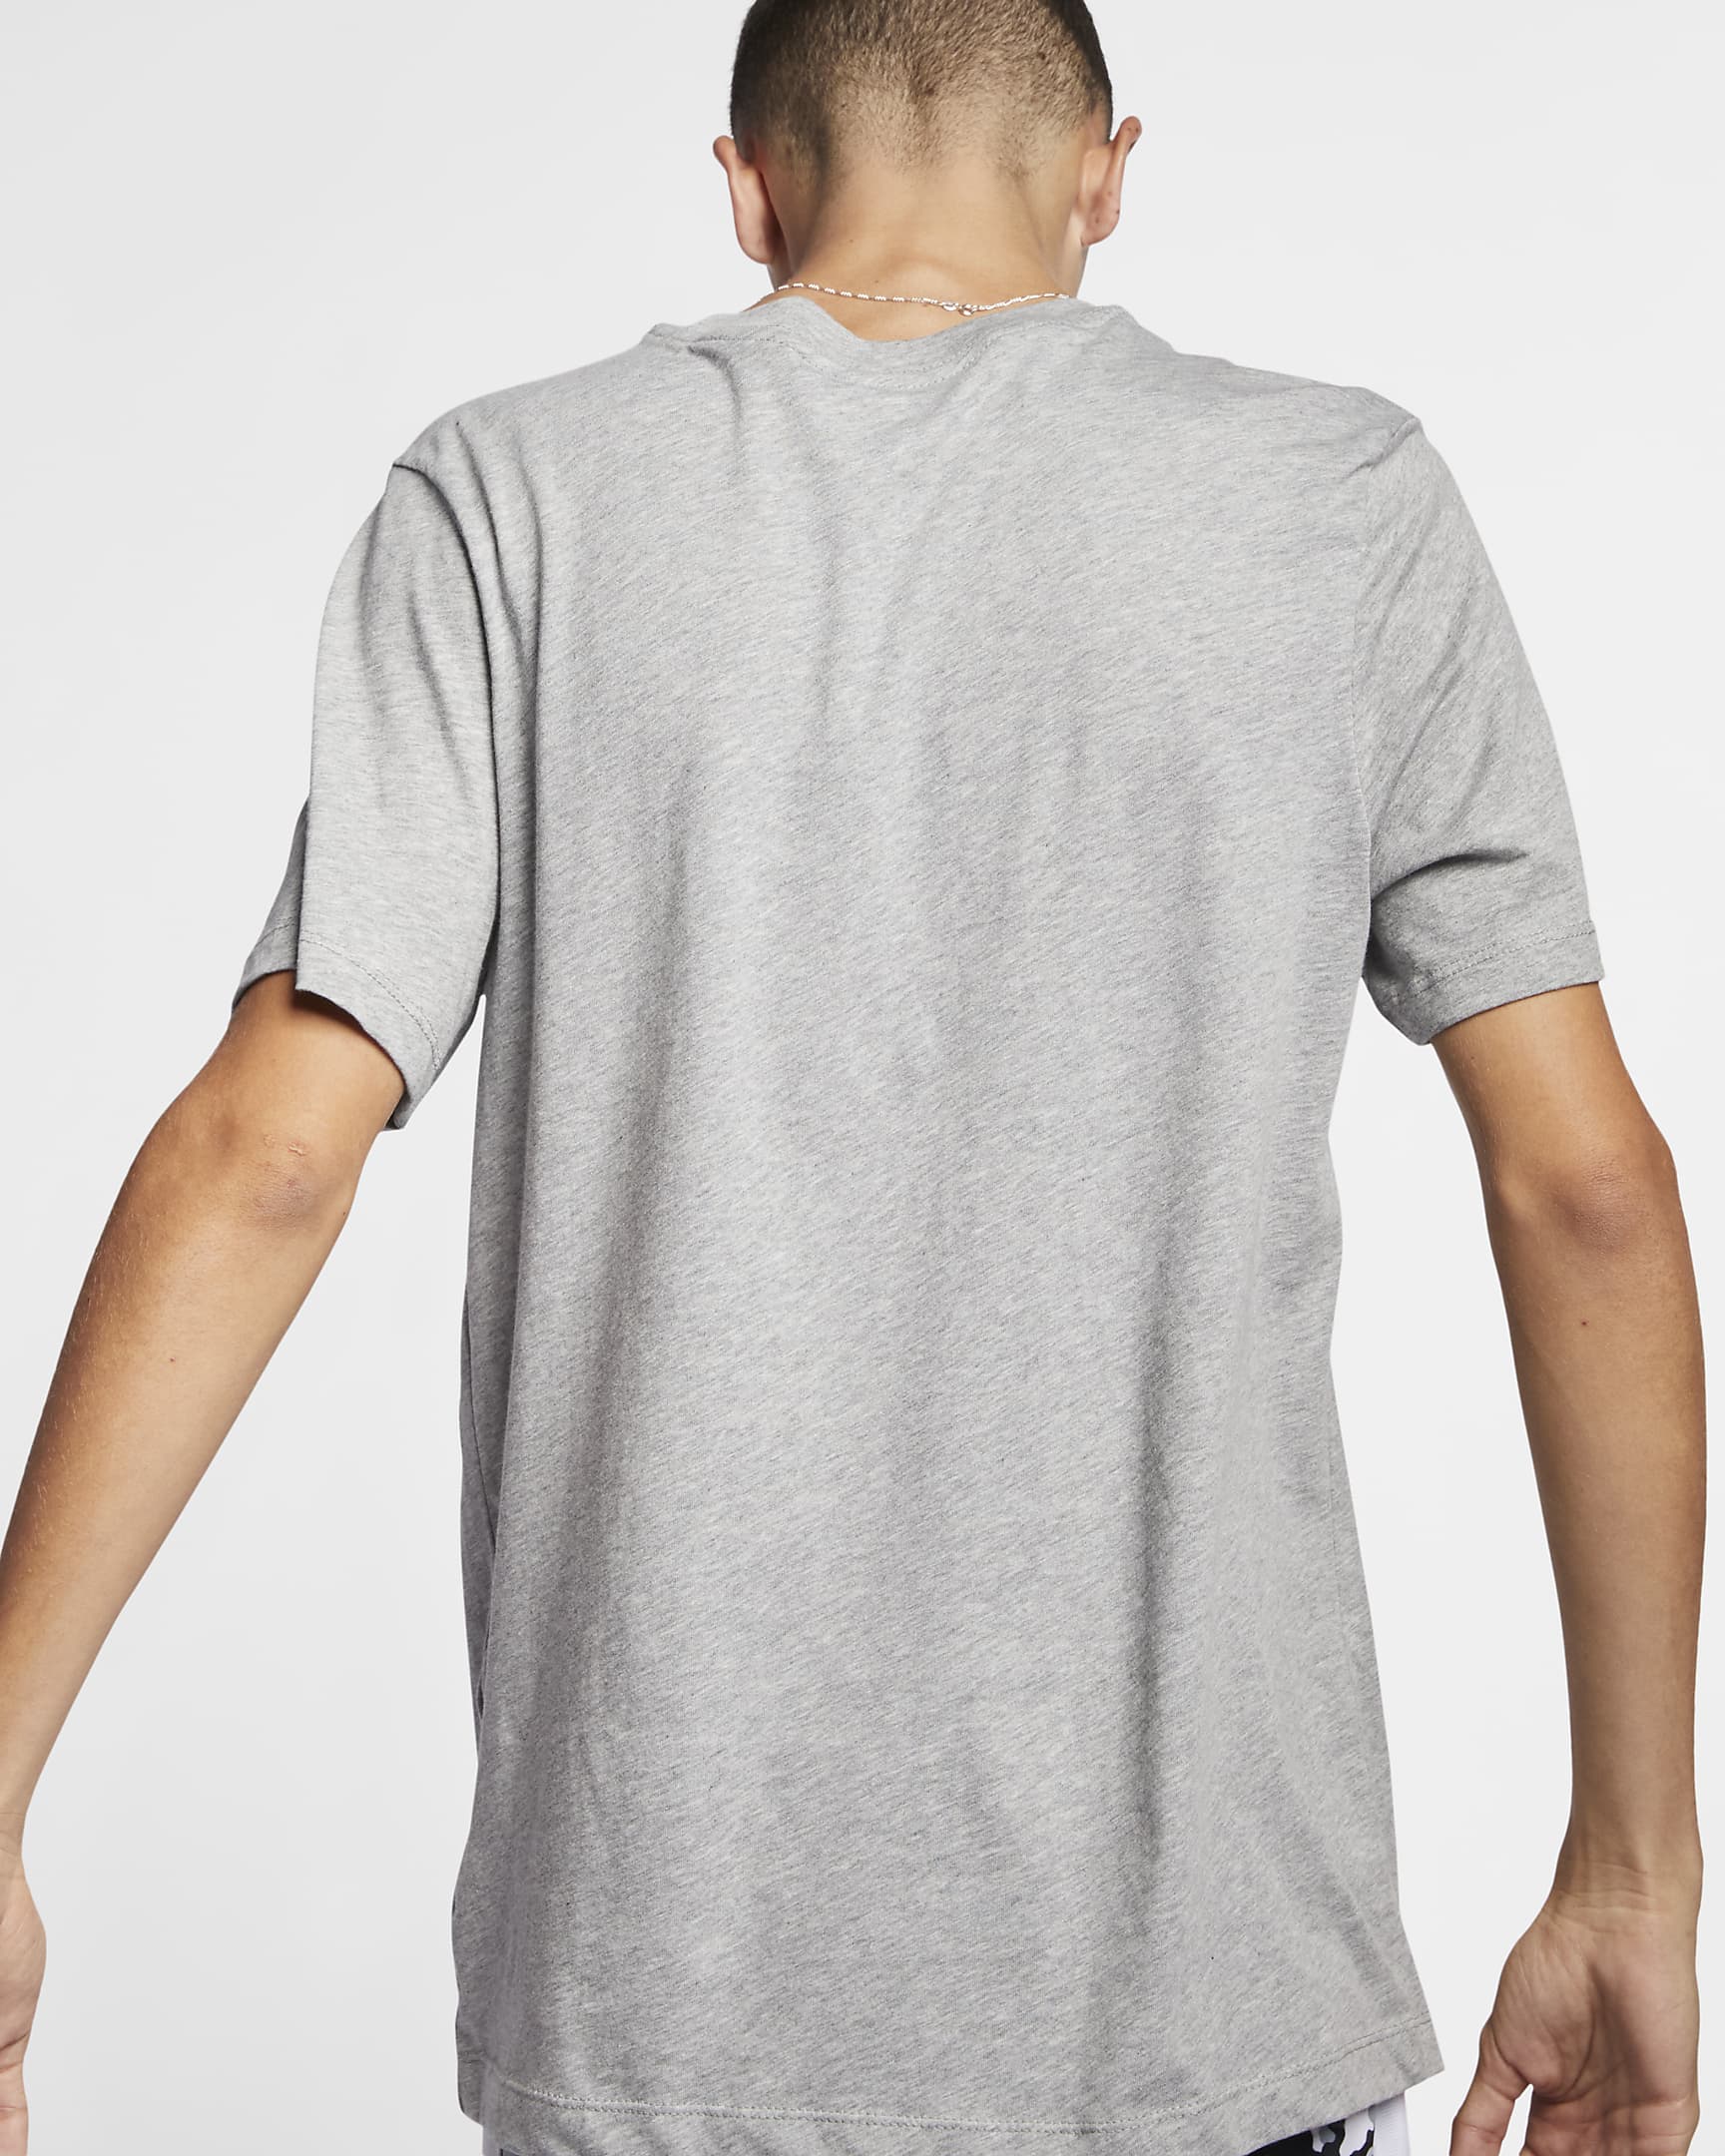 Nike Sportswear Men's T-Shirt - Dark Grey Heather/Black/White